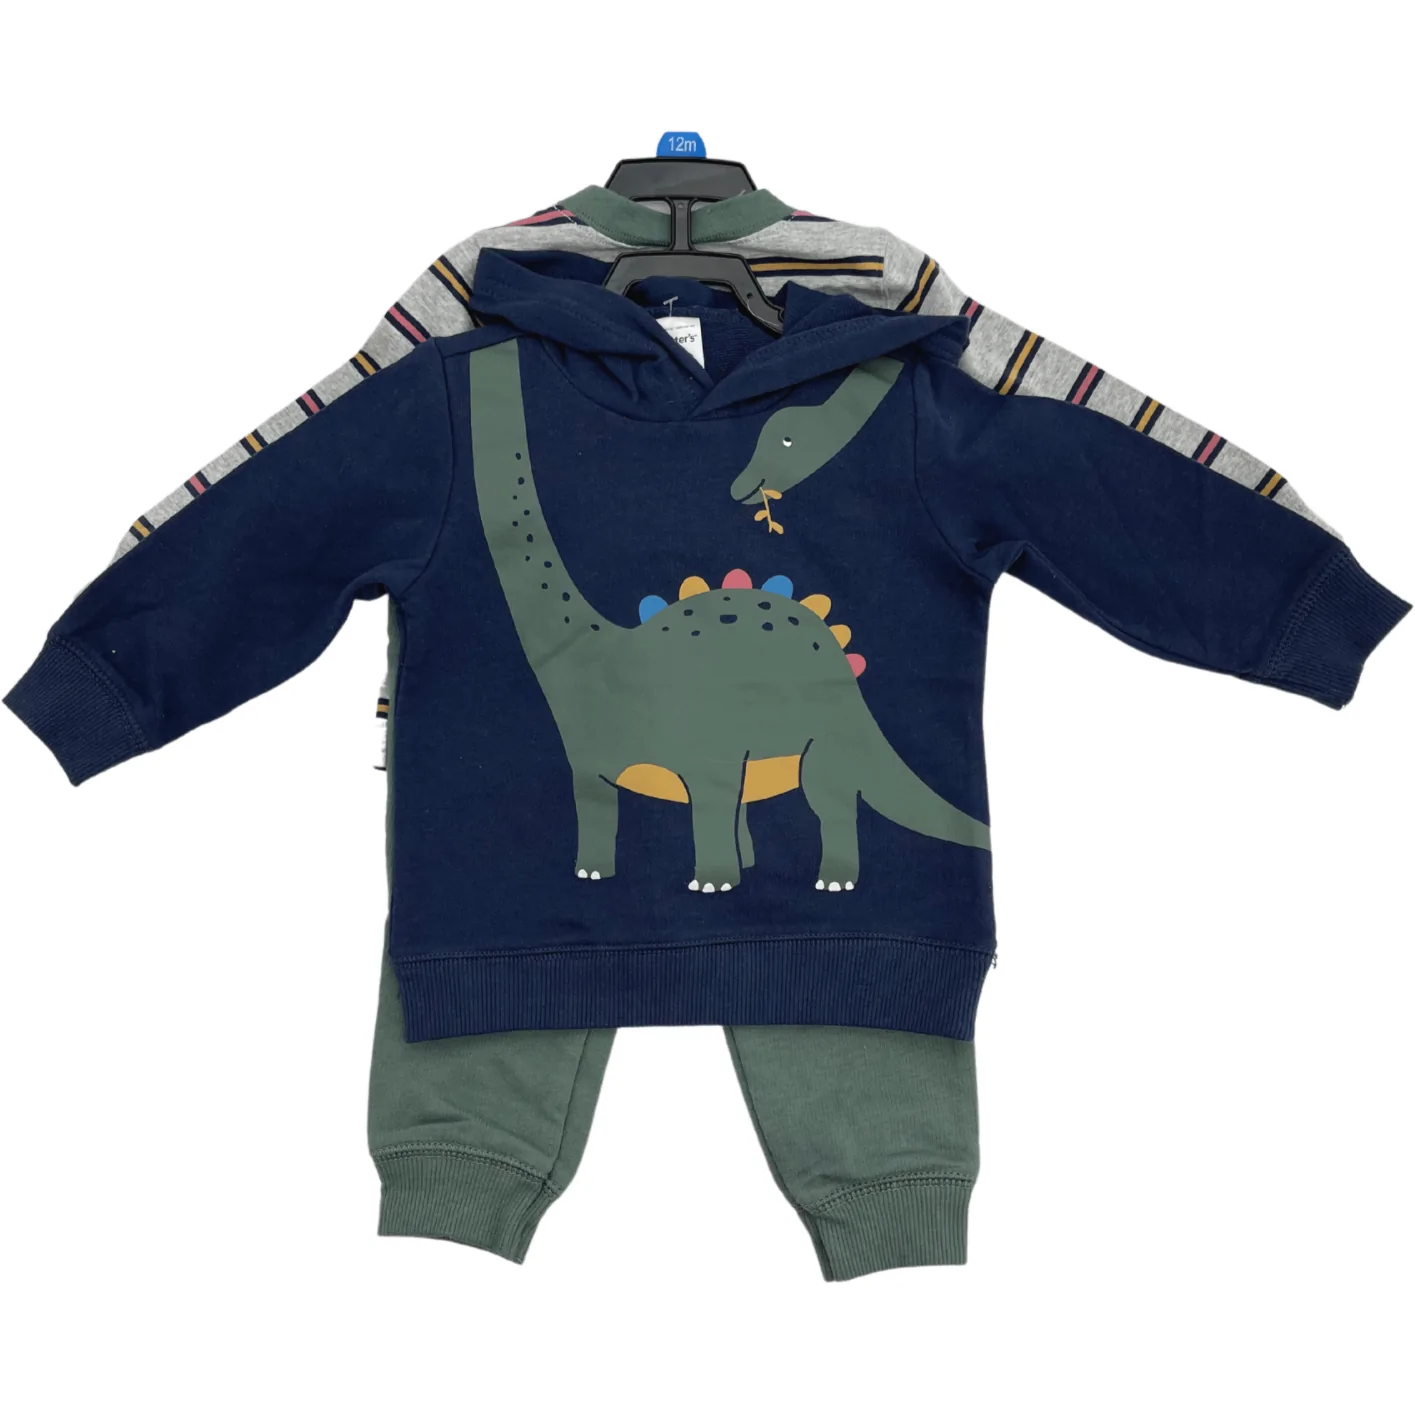 Carter's Infant Boy's 3 Piece Set / Dinosaur Theme / Blue, Green & Grey / Size 12 Months